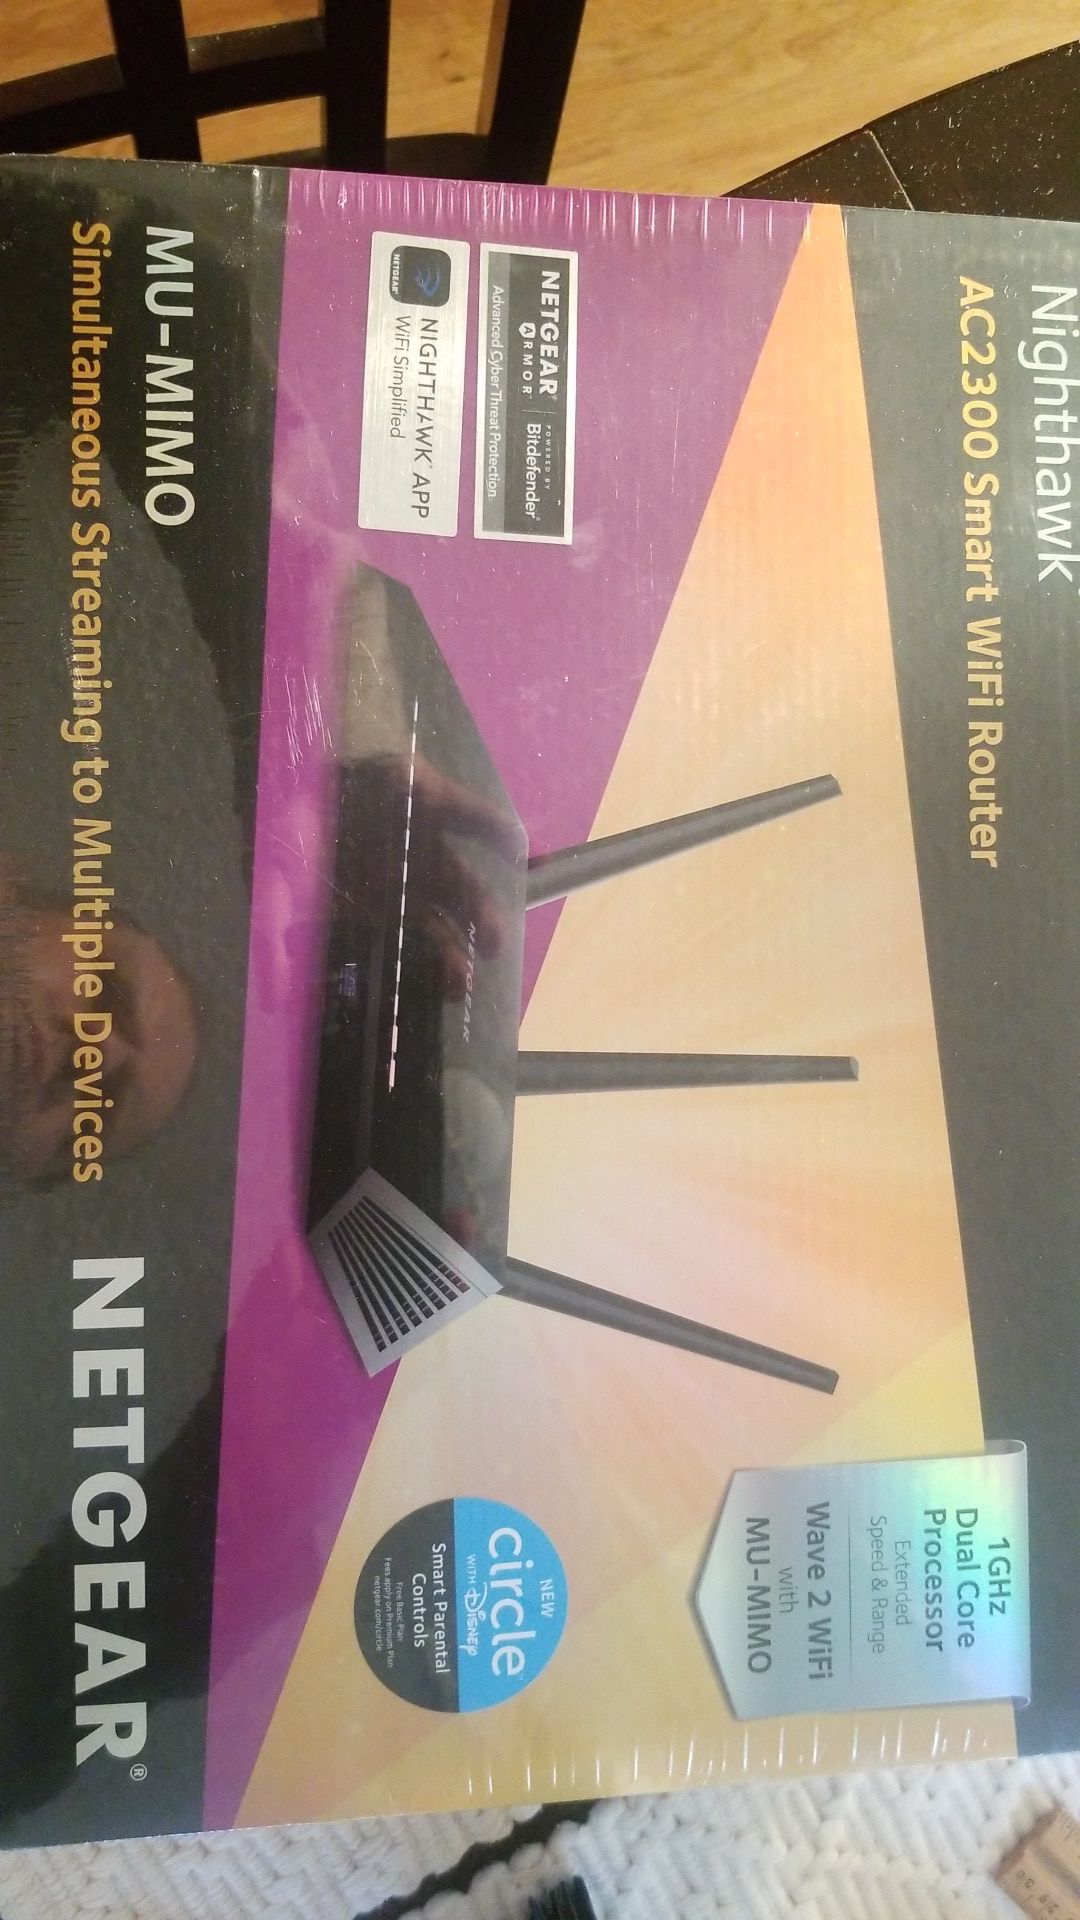 NETGEAR Nighthawk AC 230 SMART WIFI Router NEW!